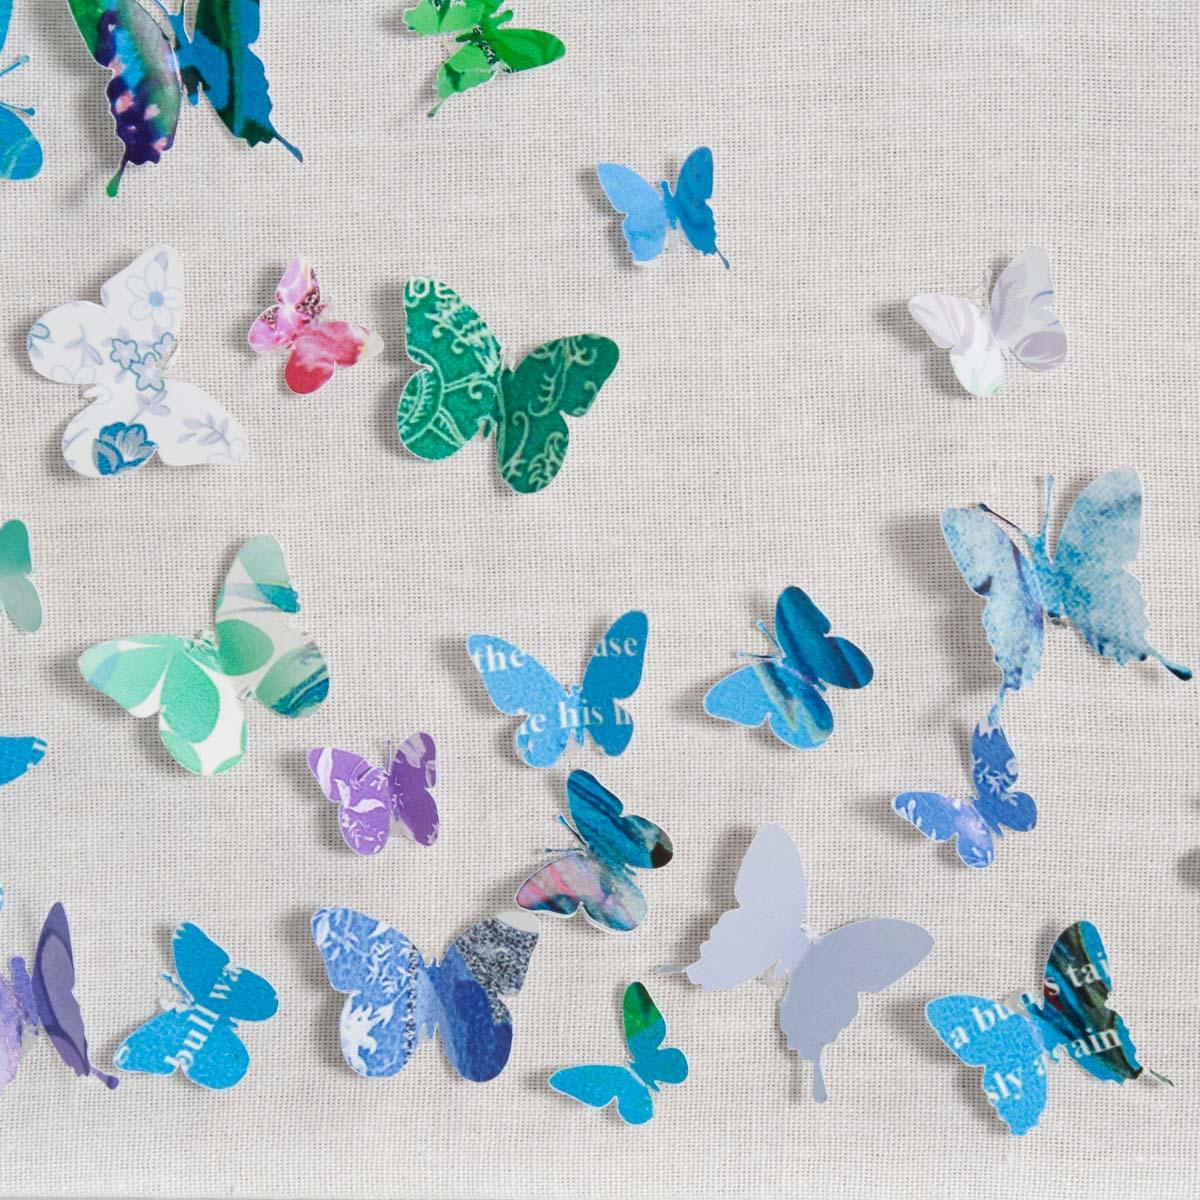  Yardwe 100 Pcs Wall Decals Sheer Butterflies Decor